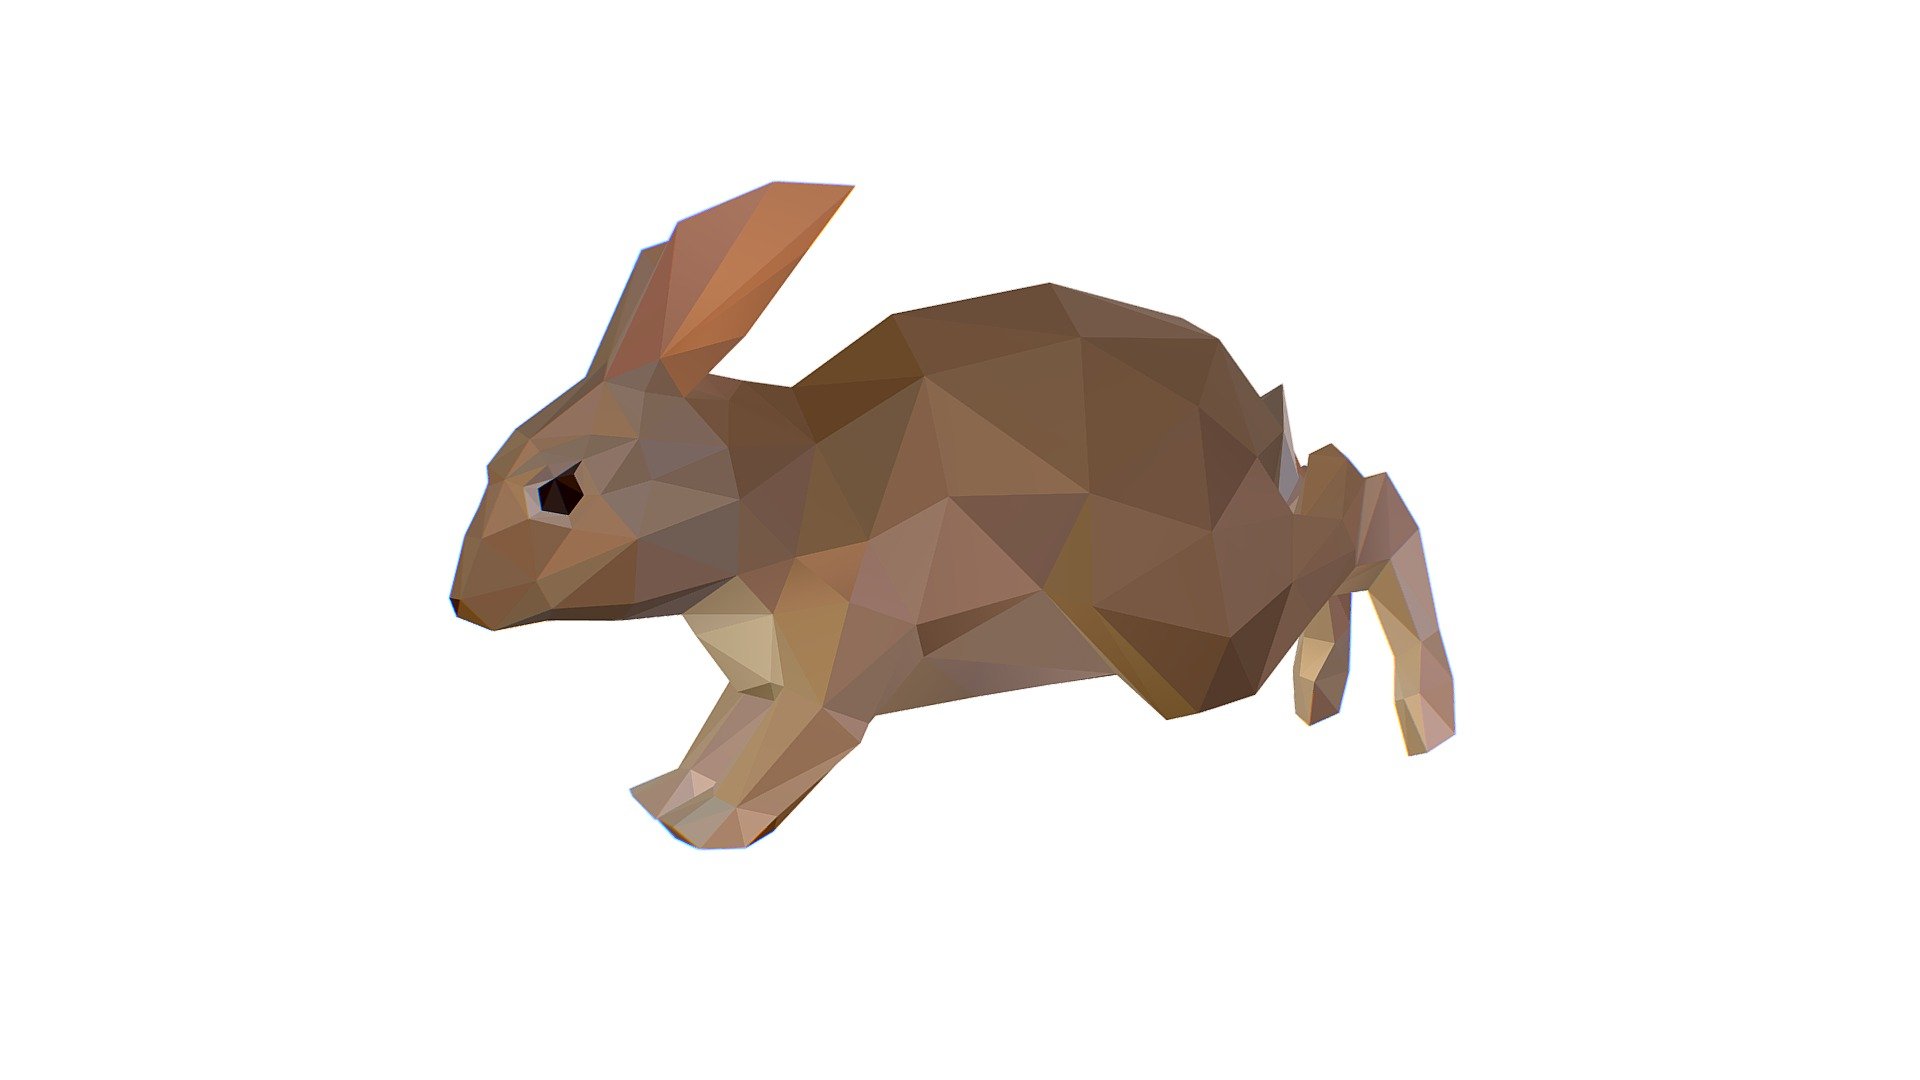 Animated White Rabbit Lowpoly Art Style

Animation layers:
Run    0-16
Walk   16-32
Fallow 33-64 - Animated White Rabbit Lowpoly Art Style - Buy Royalty Free 3D model by Oleg Shuldiakov (@olegshuldiakov) 3d model